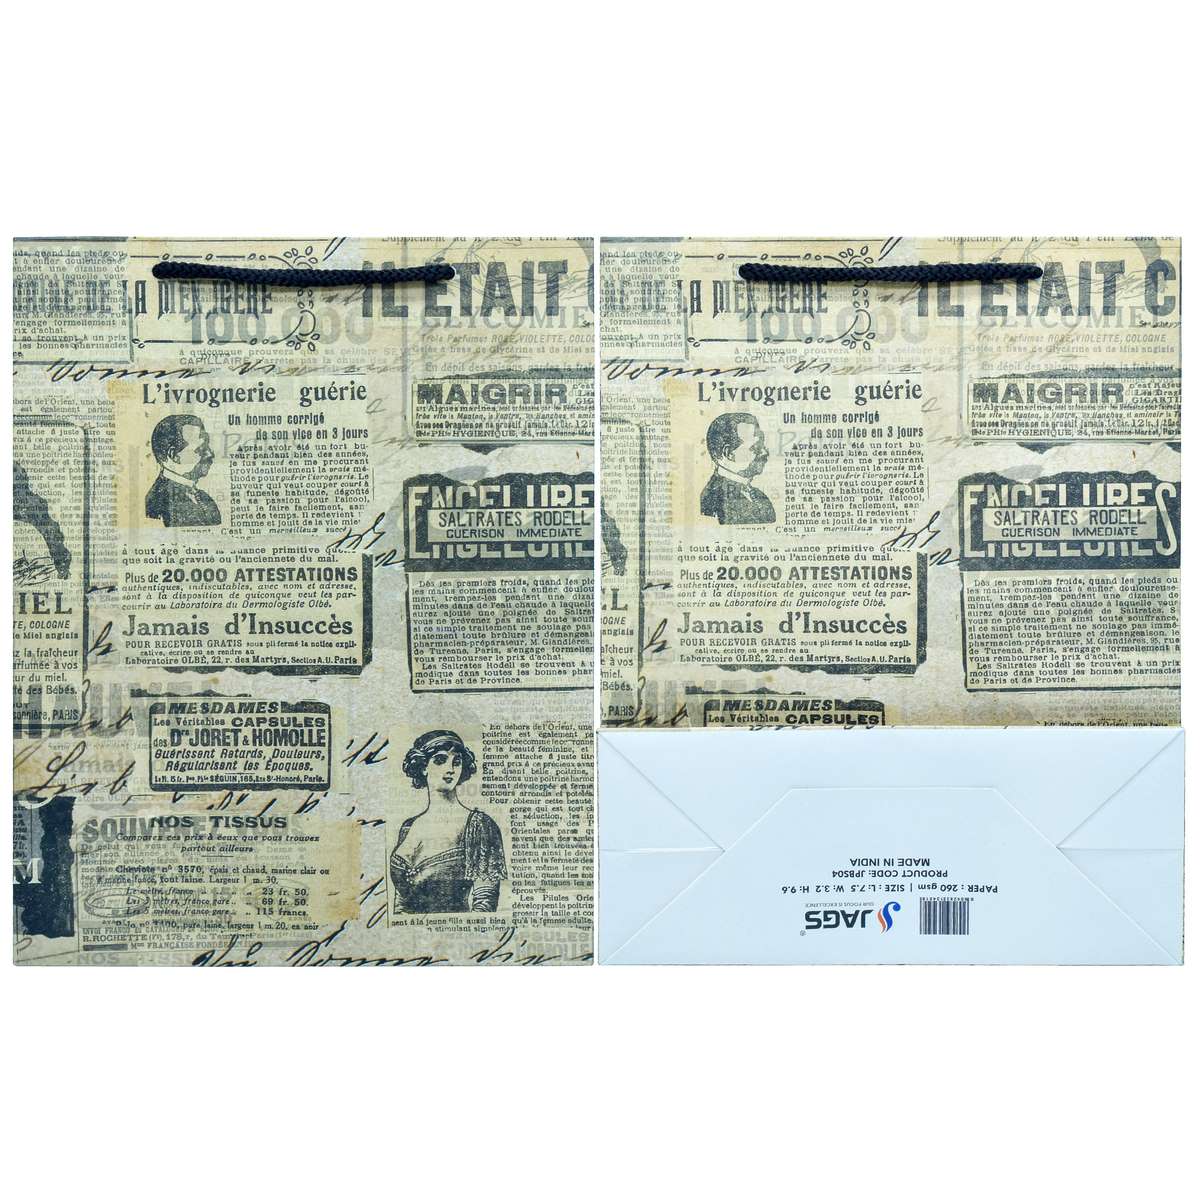 jags-mumbai Bag Jags Paper Bag Small Vintage Newspaper A5 JPBS04